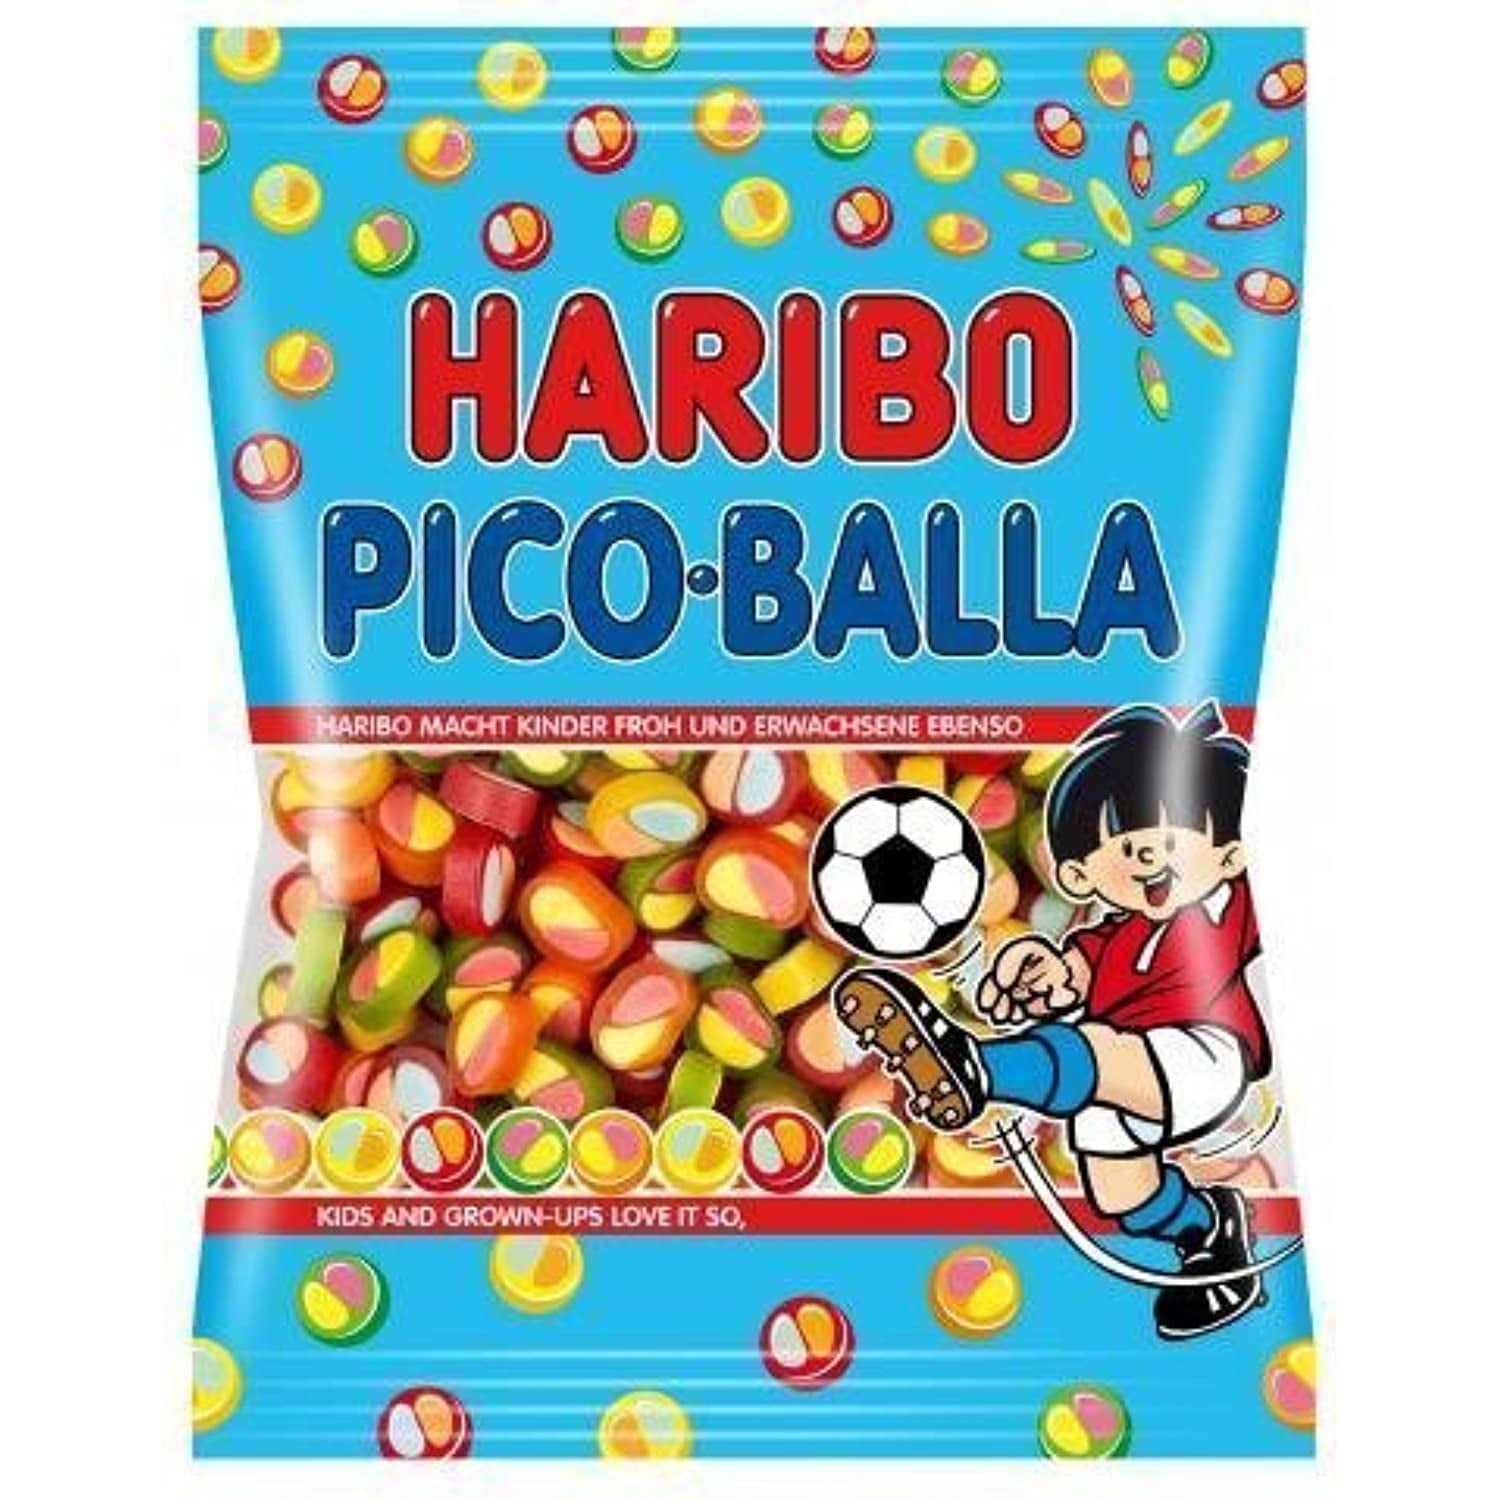 Haribo Pico-Balla 22er Pack (22x160g Packung) + usy Block